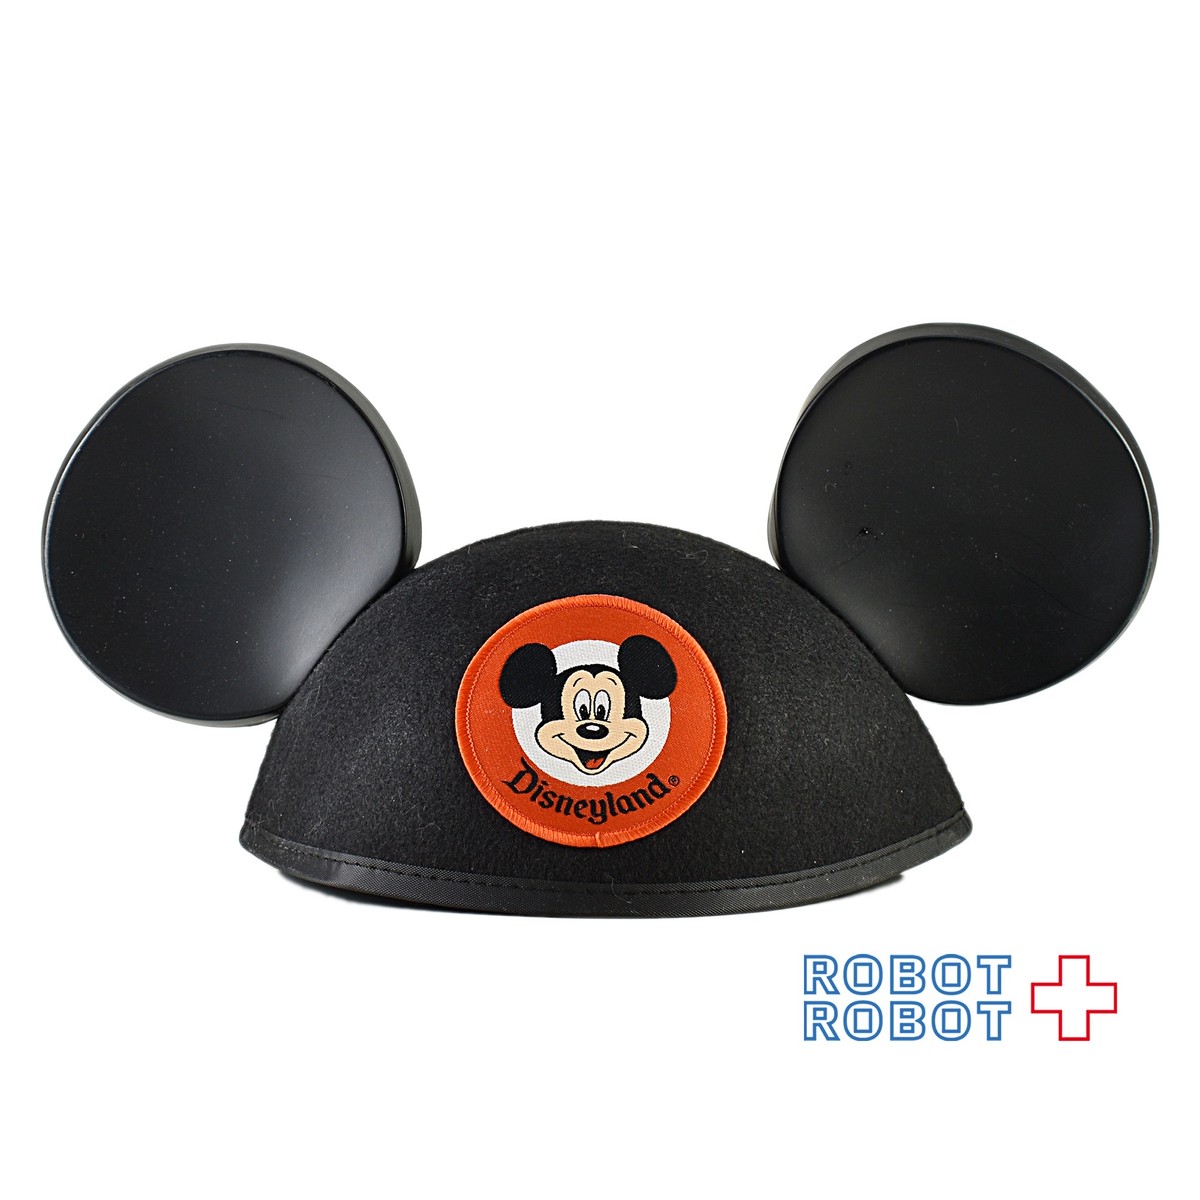 Disneyland ディズニーランド ミッキー ファンキャップ 帽子 Robotrobot